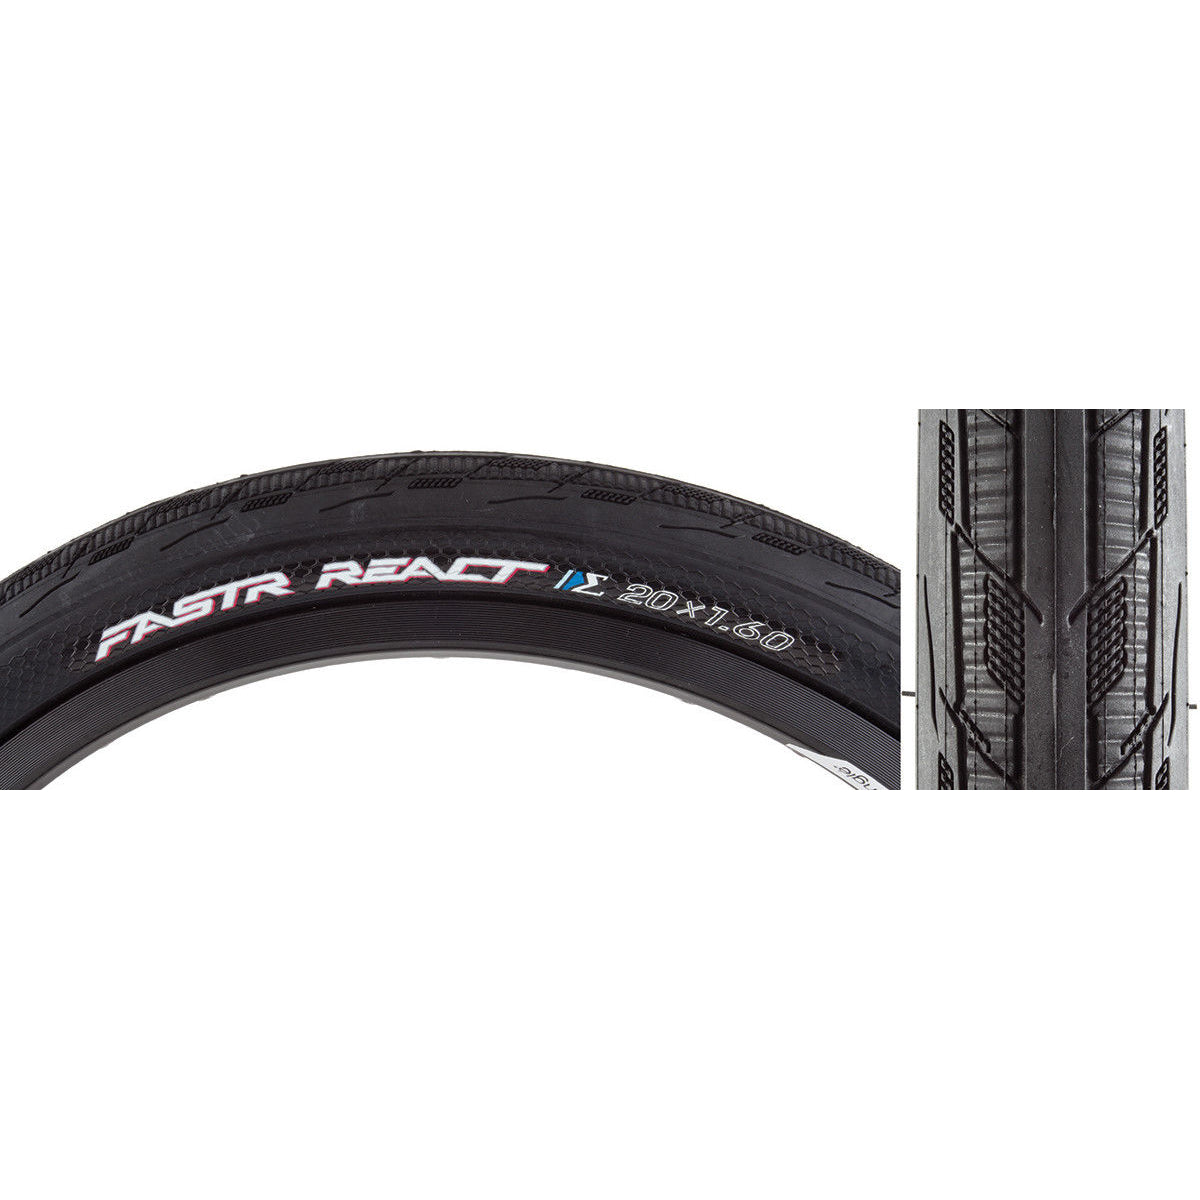 20x1.60 Tioga Fastr React S-Spec Folding BMX Tire - Black